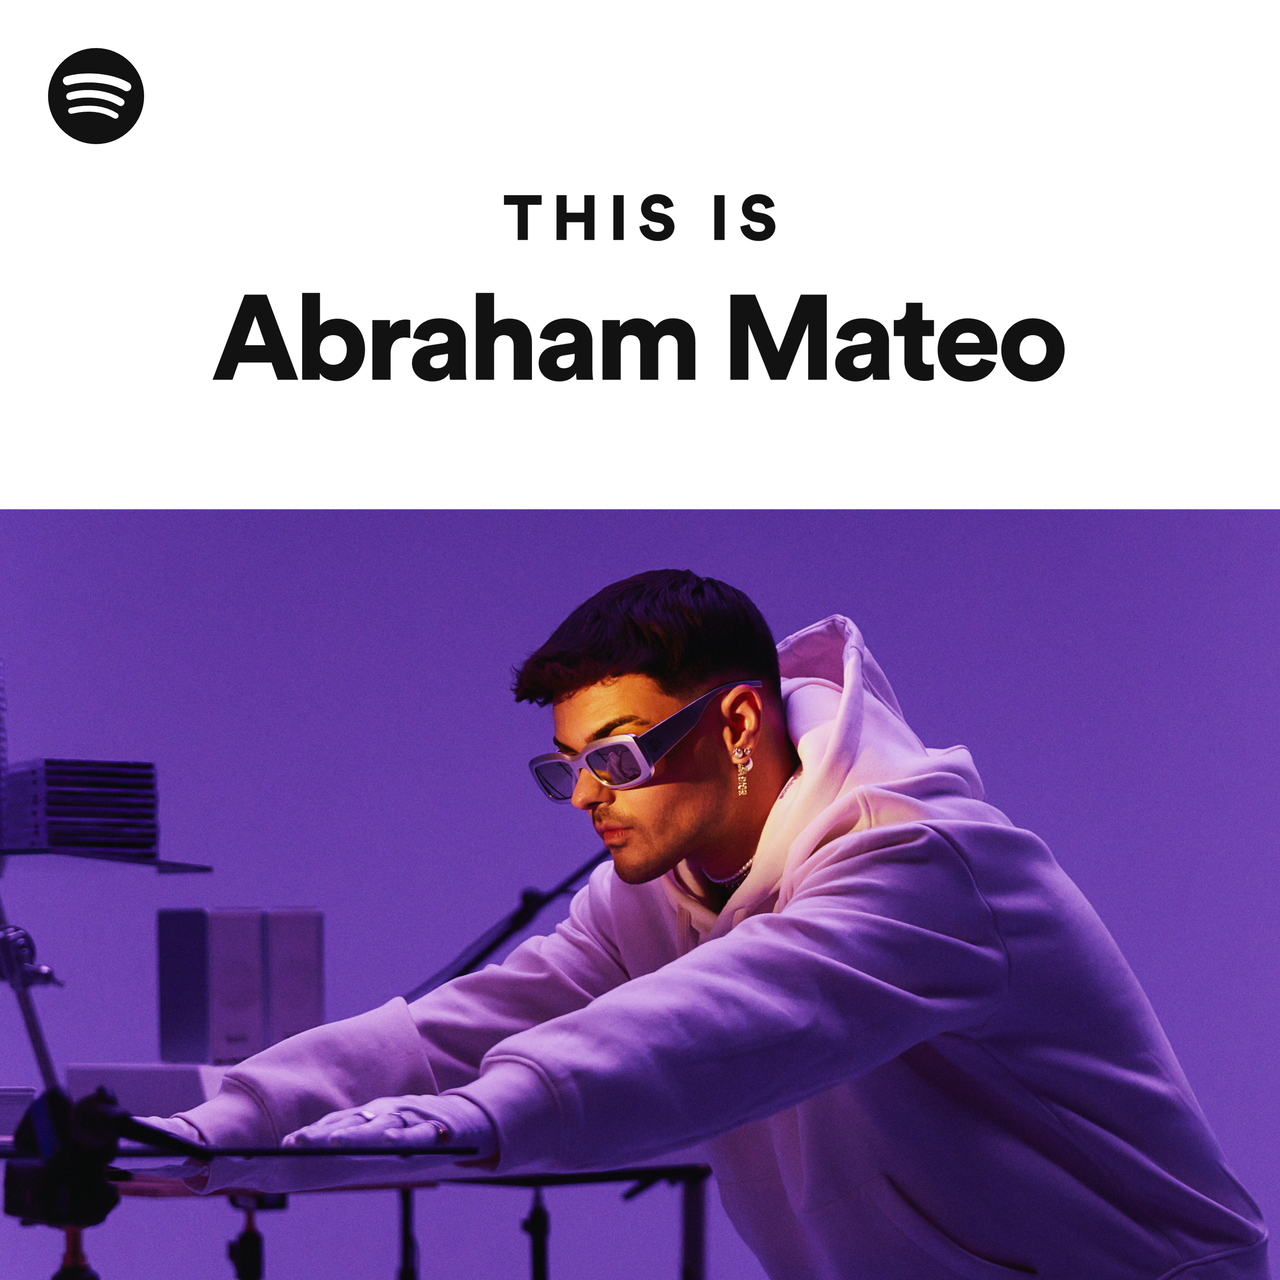 Abraham Mateo - Maniaca 1 Hour Loop 